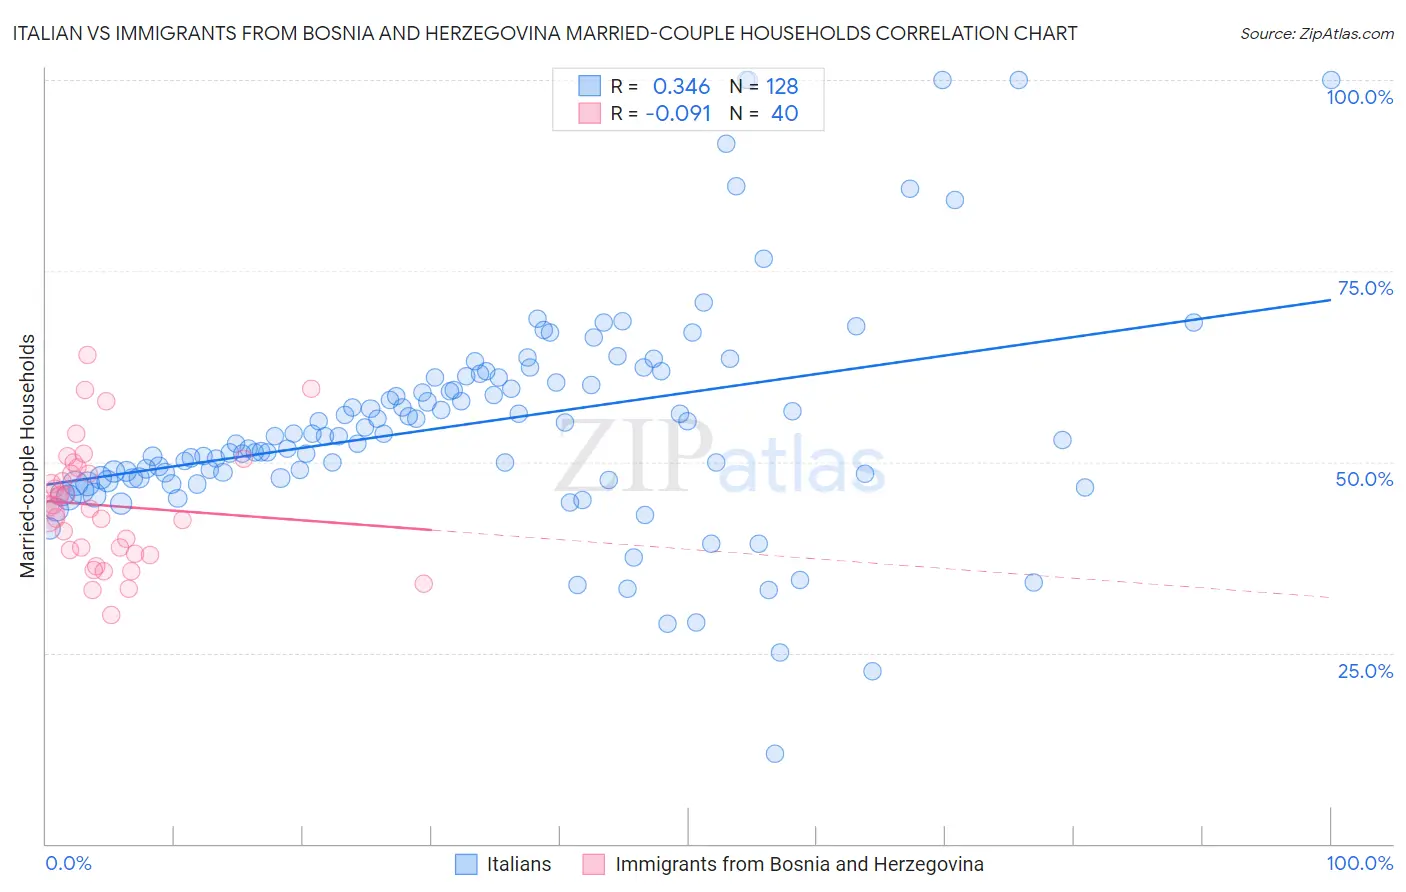 Italian vs Immigrants from Bosnia and Herzegovina Married-couple Households